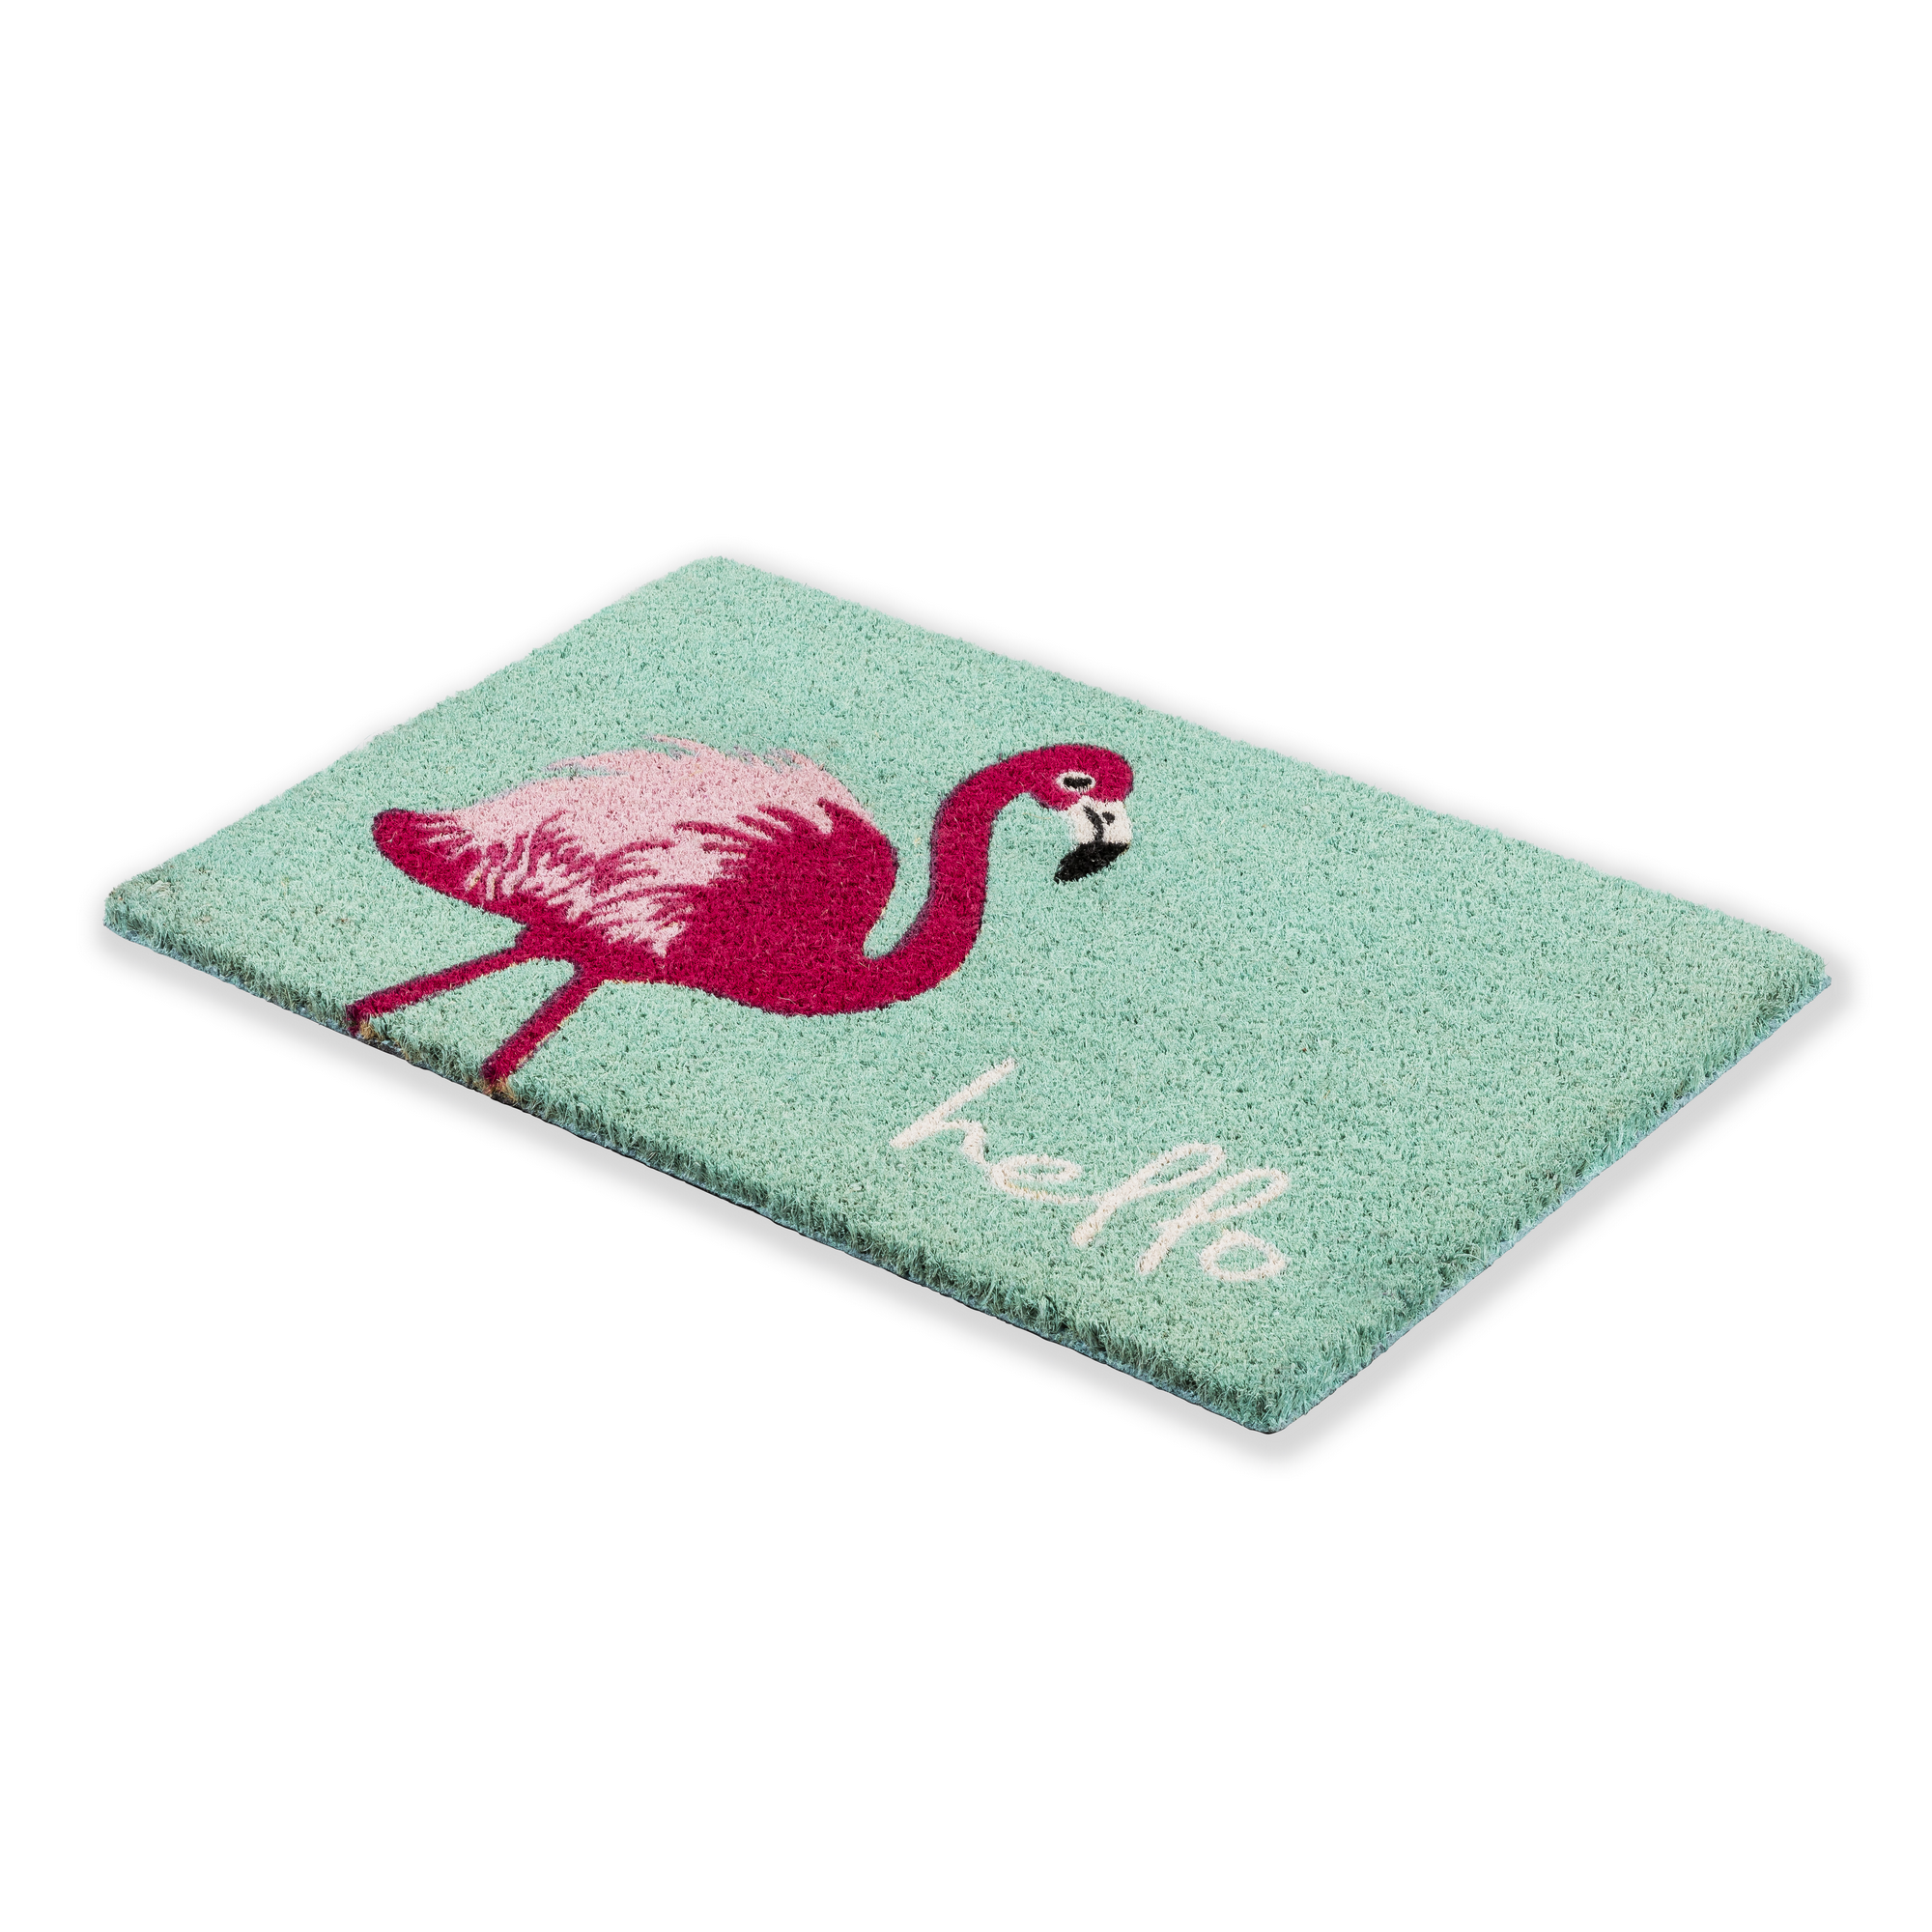 Kokosmatte 'Coco Style' 40 x 60 cm Flamingo türkis + product picture